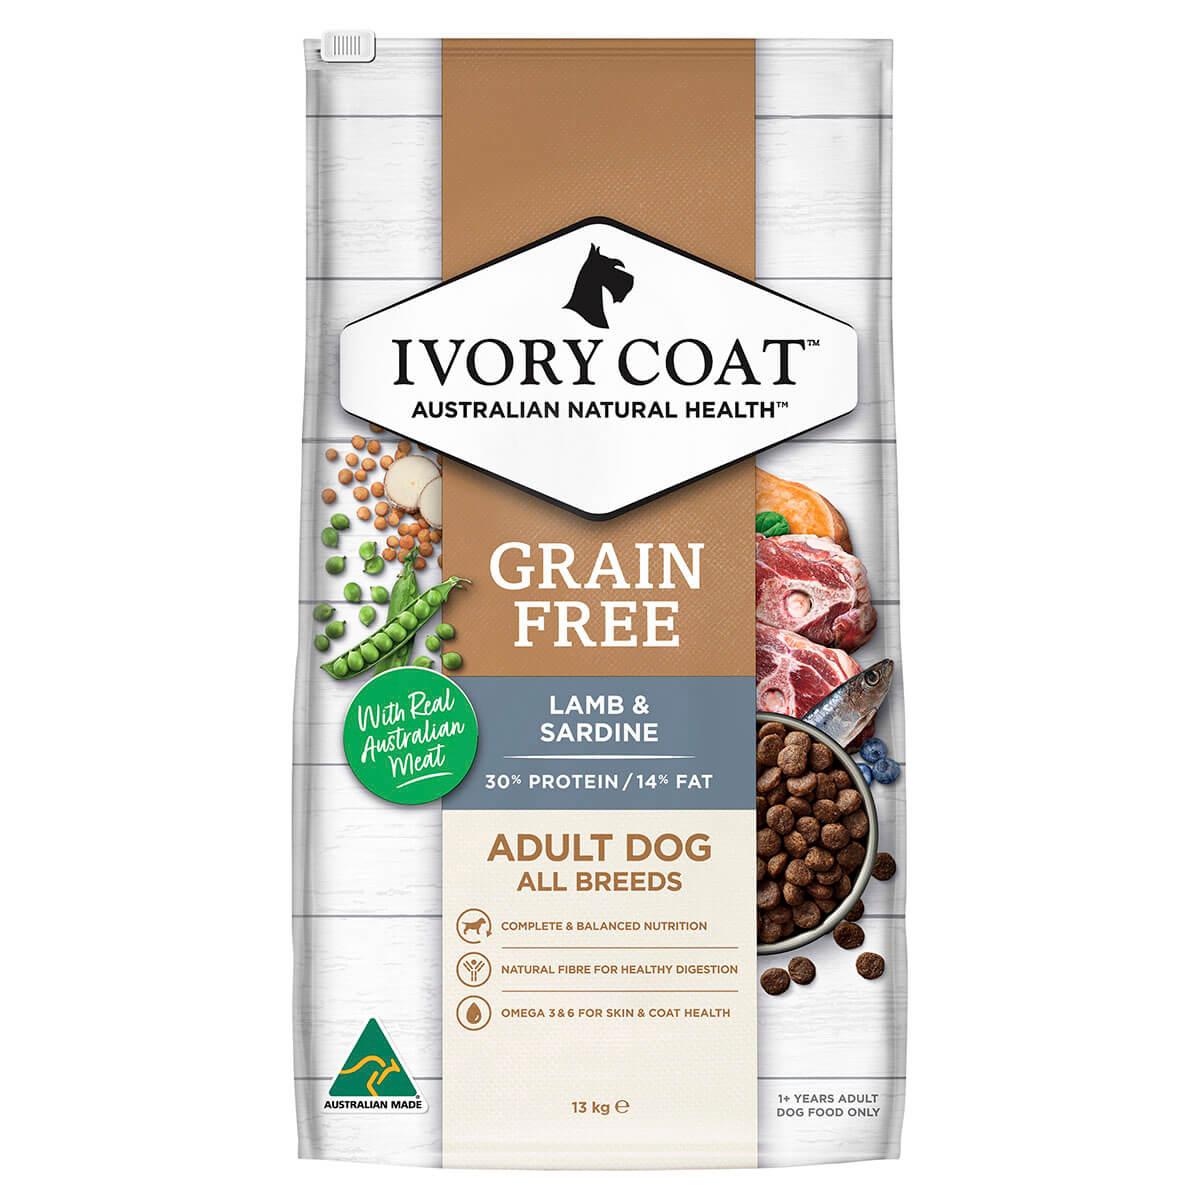 Ivory Coat Grain Free Adult Lamb & Sardine Dry Dog Food